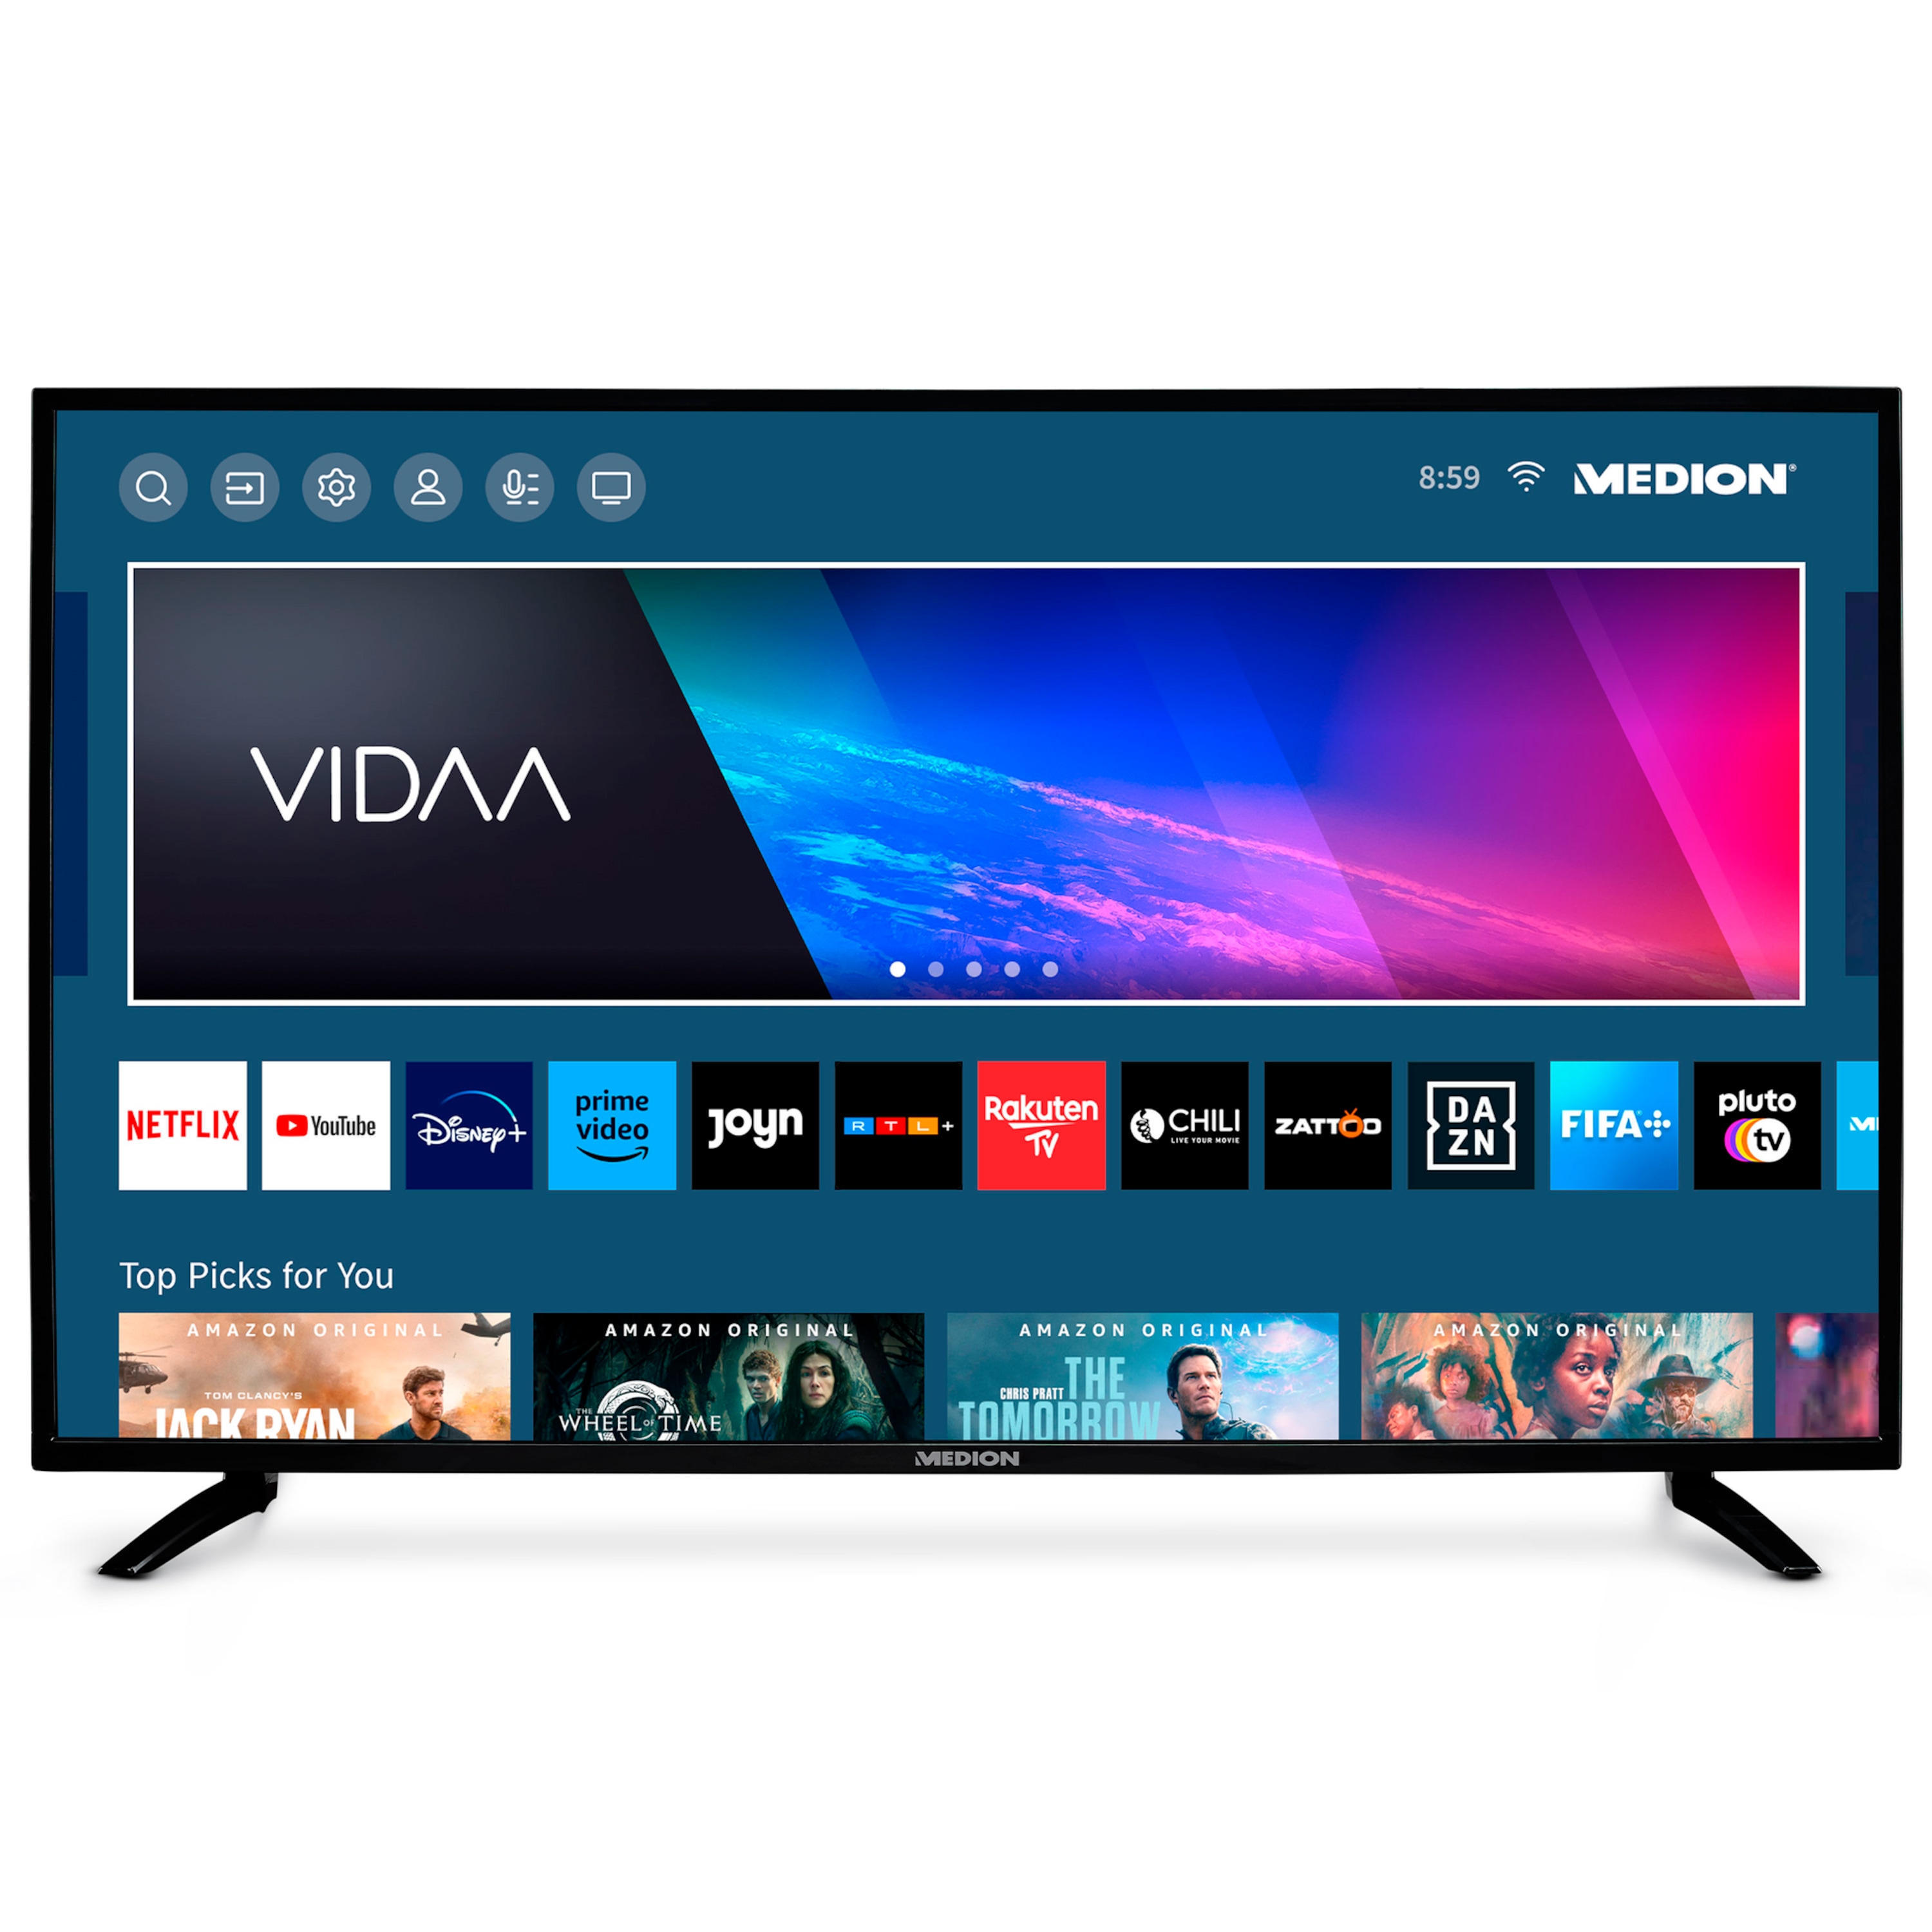 LIFE® X14315 (MD 30090) Ultra HD LCD Smart TV | 108 cm (43'') Ultra HD Display |HDR | PVR ready | NETFLIX | Prime Video | Disney+ App | VIDAA Store | Bluetooth® | HD Triple Tuner |